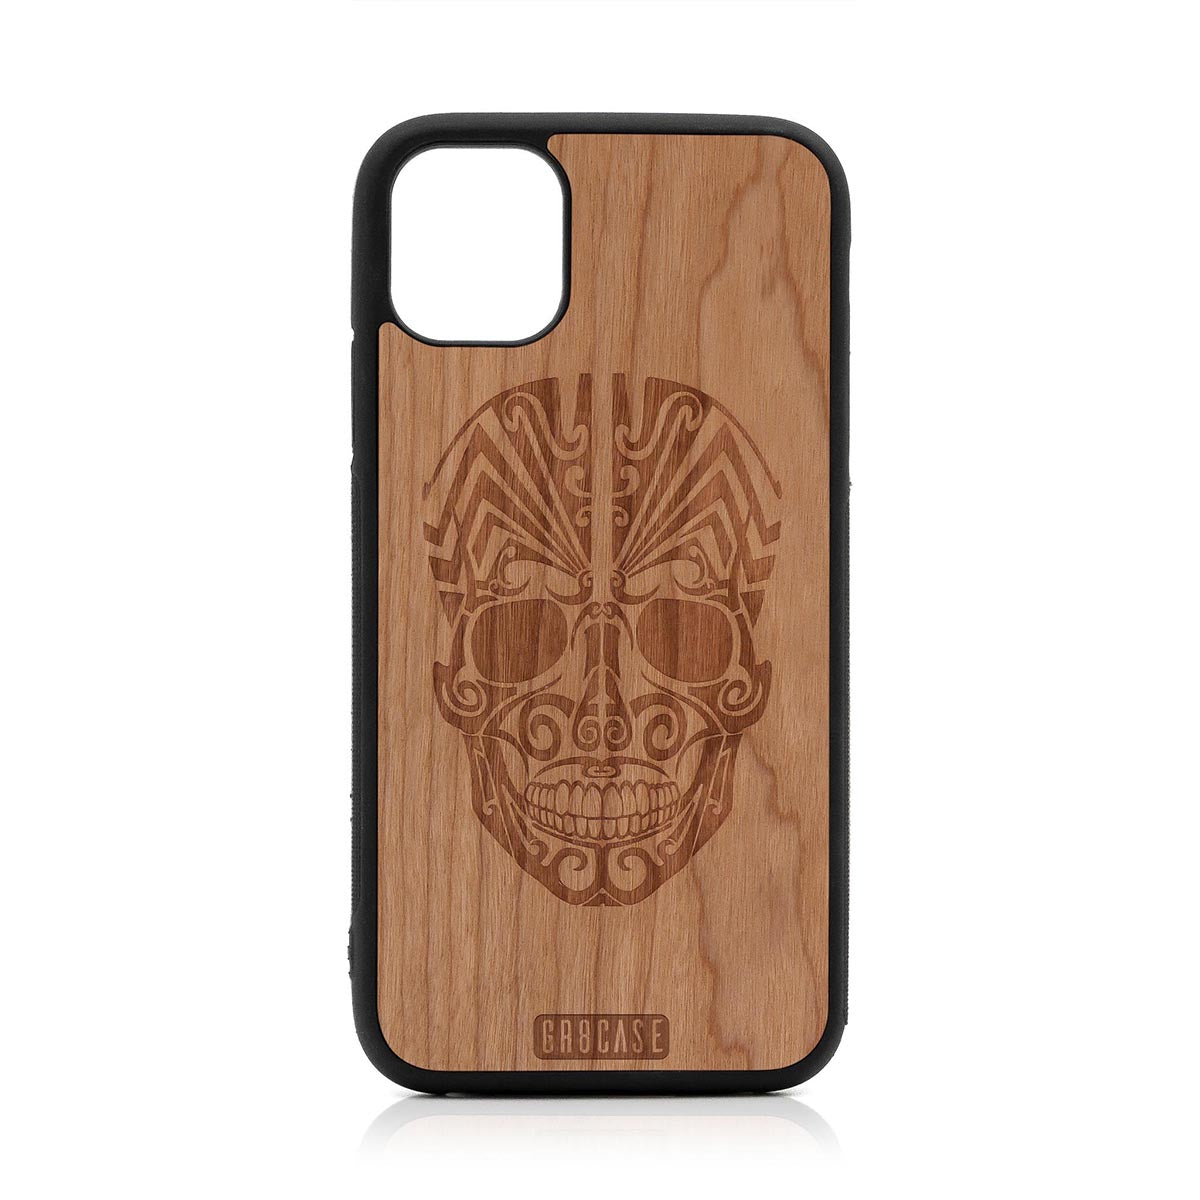 Tattoo Skull Design Design Wood Case For iPhone 11 Pro